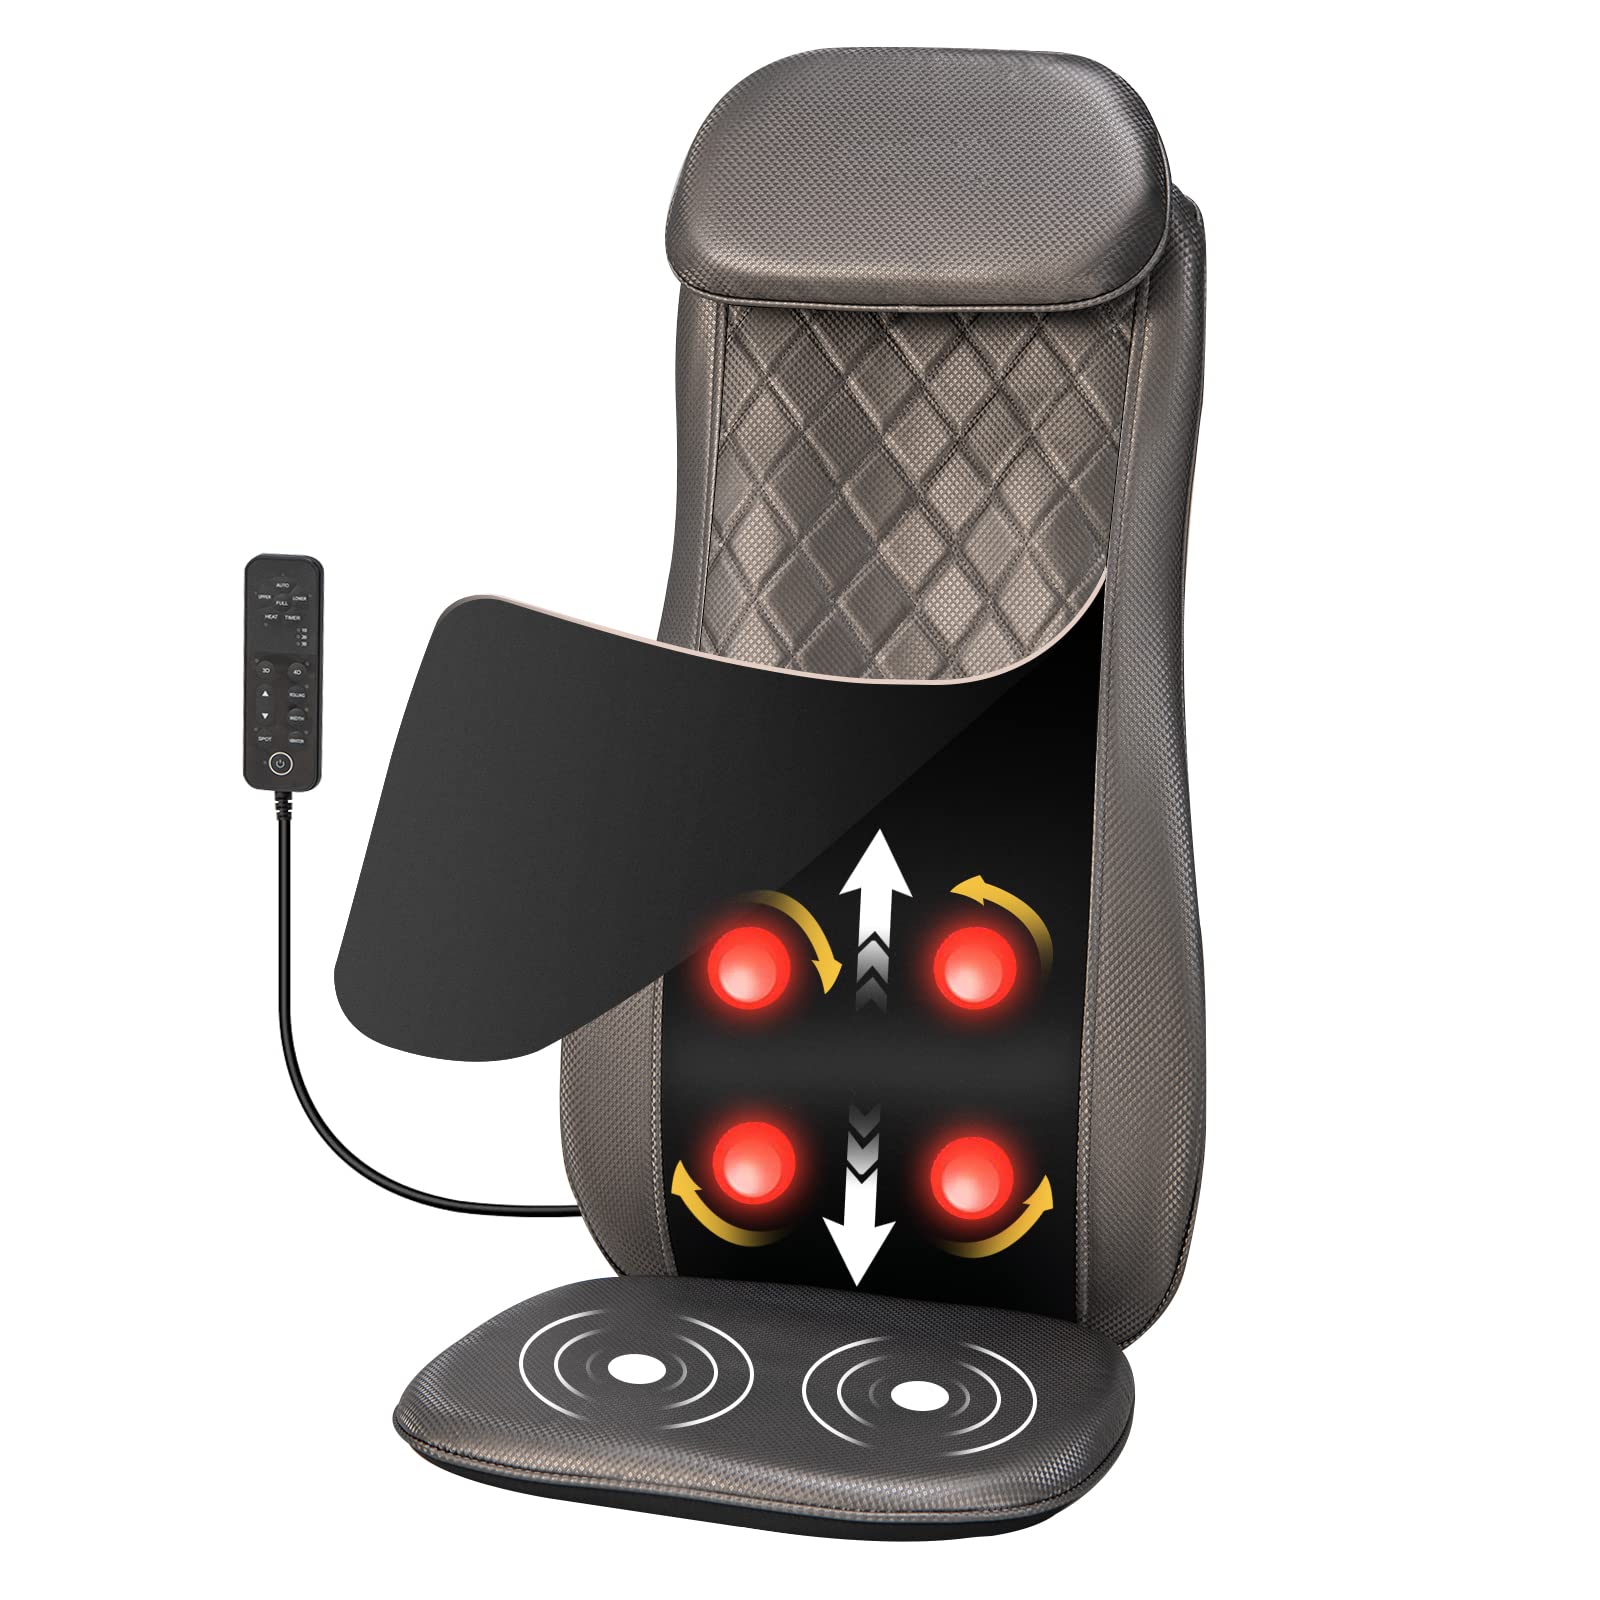 Giantex Back Massager Chair Pad - Massage Seat Cushion with Heat & Vibration